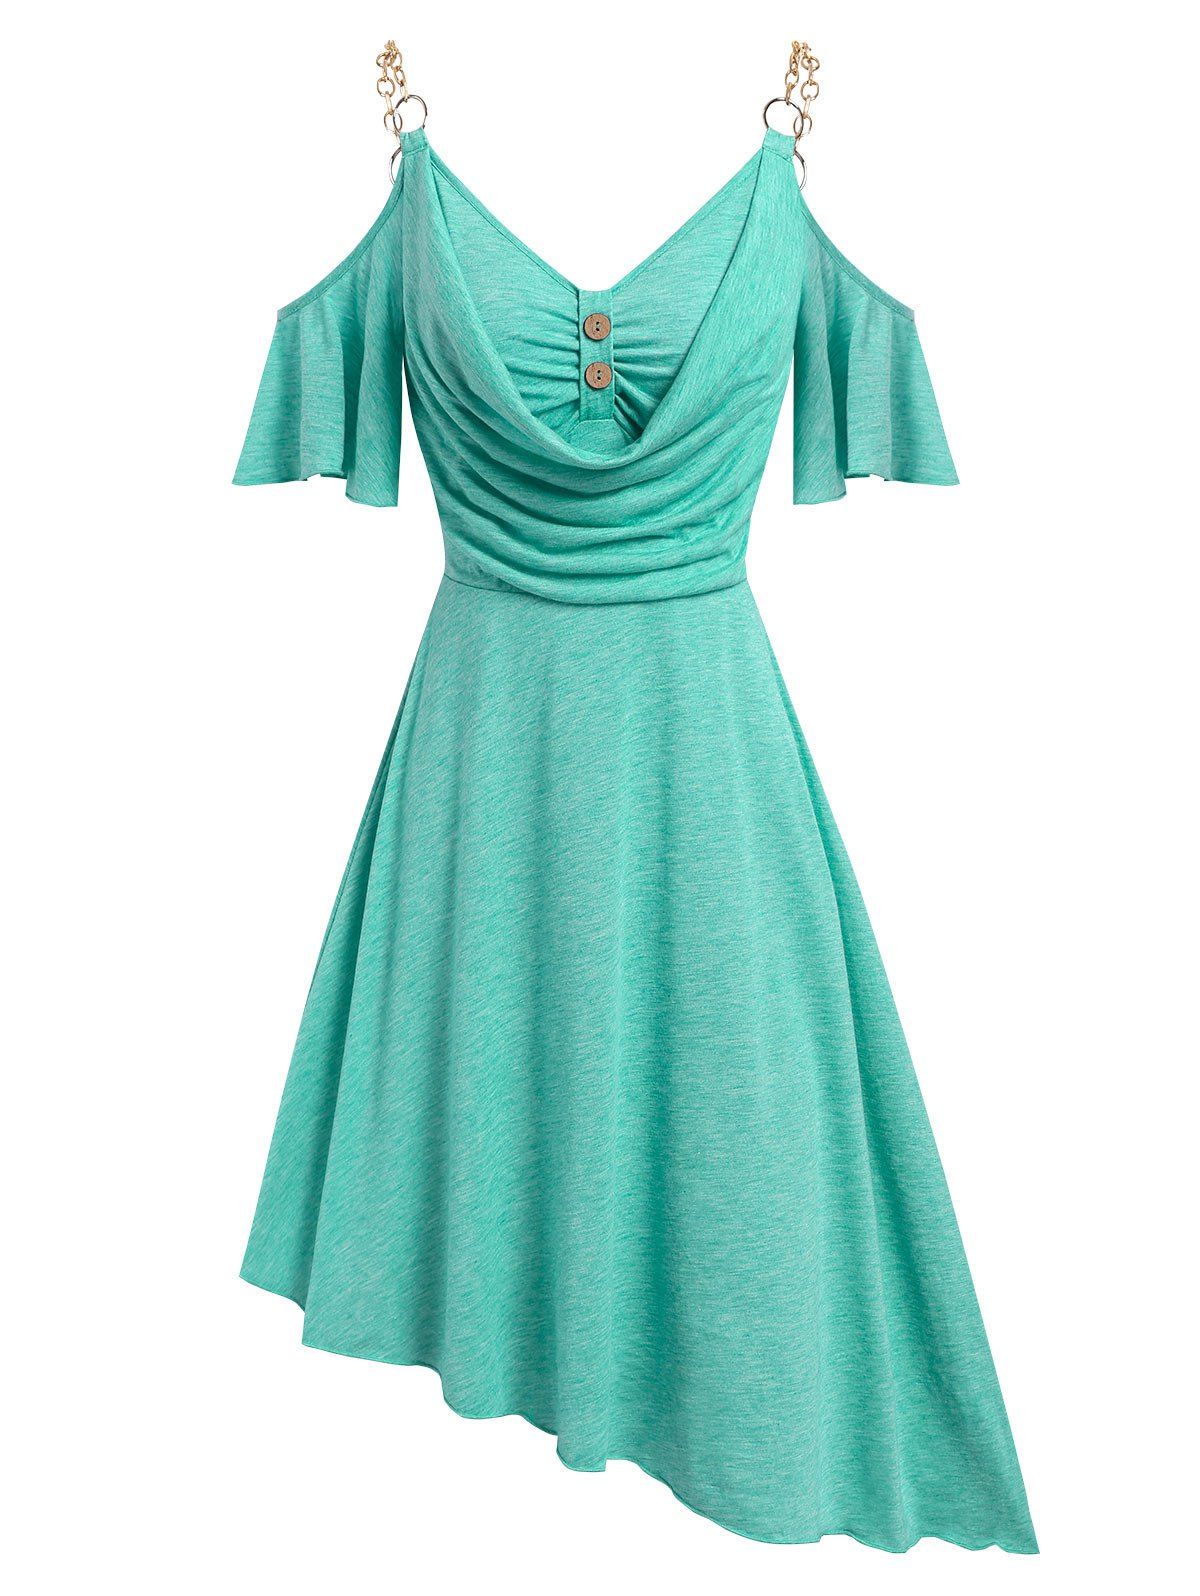 Chain Strap Cold Shoulder Draped Asymmetric Dress - LIGHT GREEN S